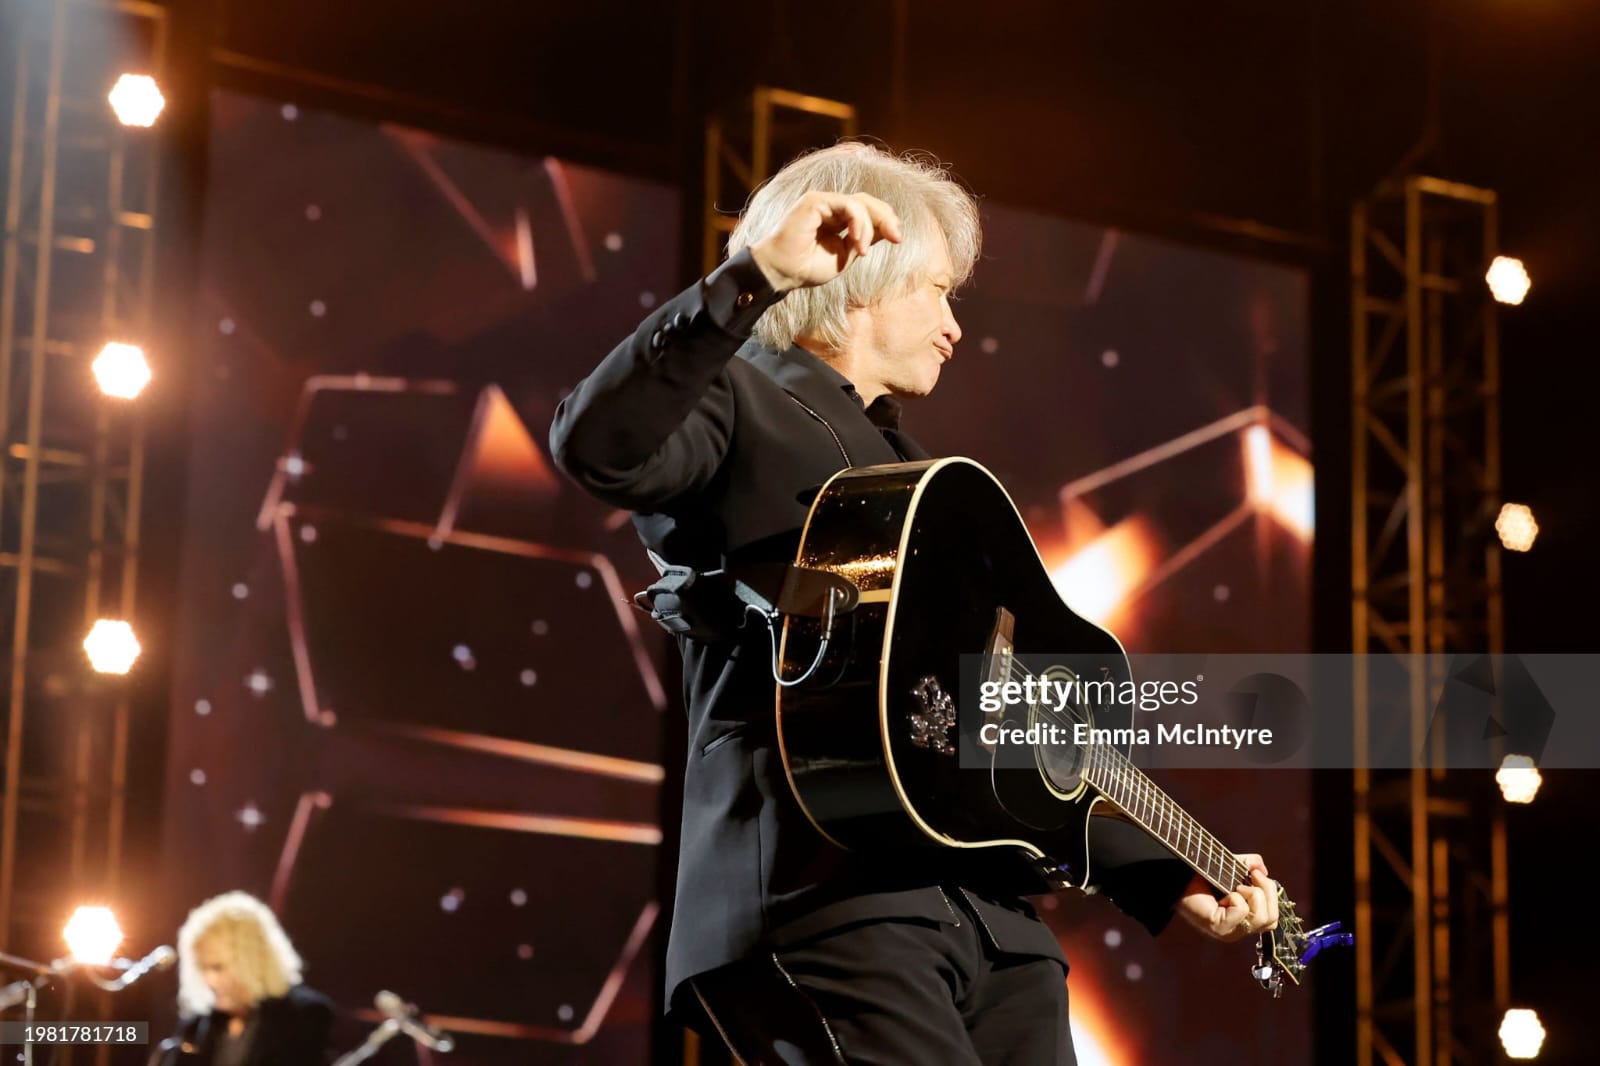 Jon Bon Jovi recebe prêmio na cerimônia do Grammy 